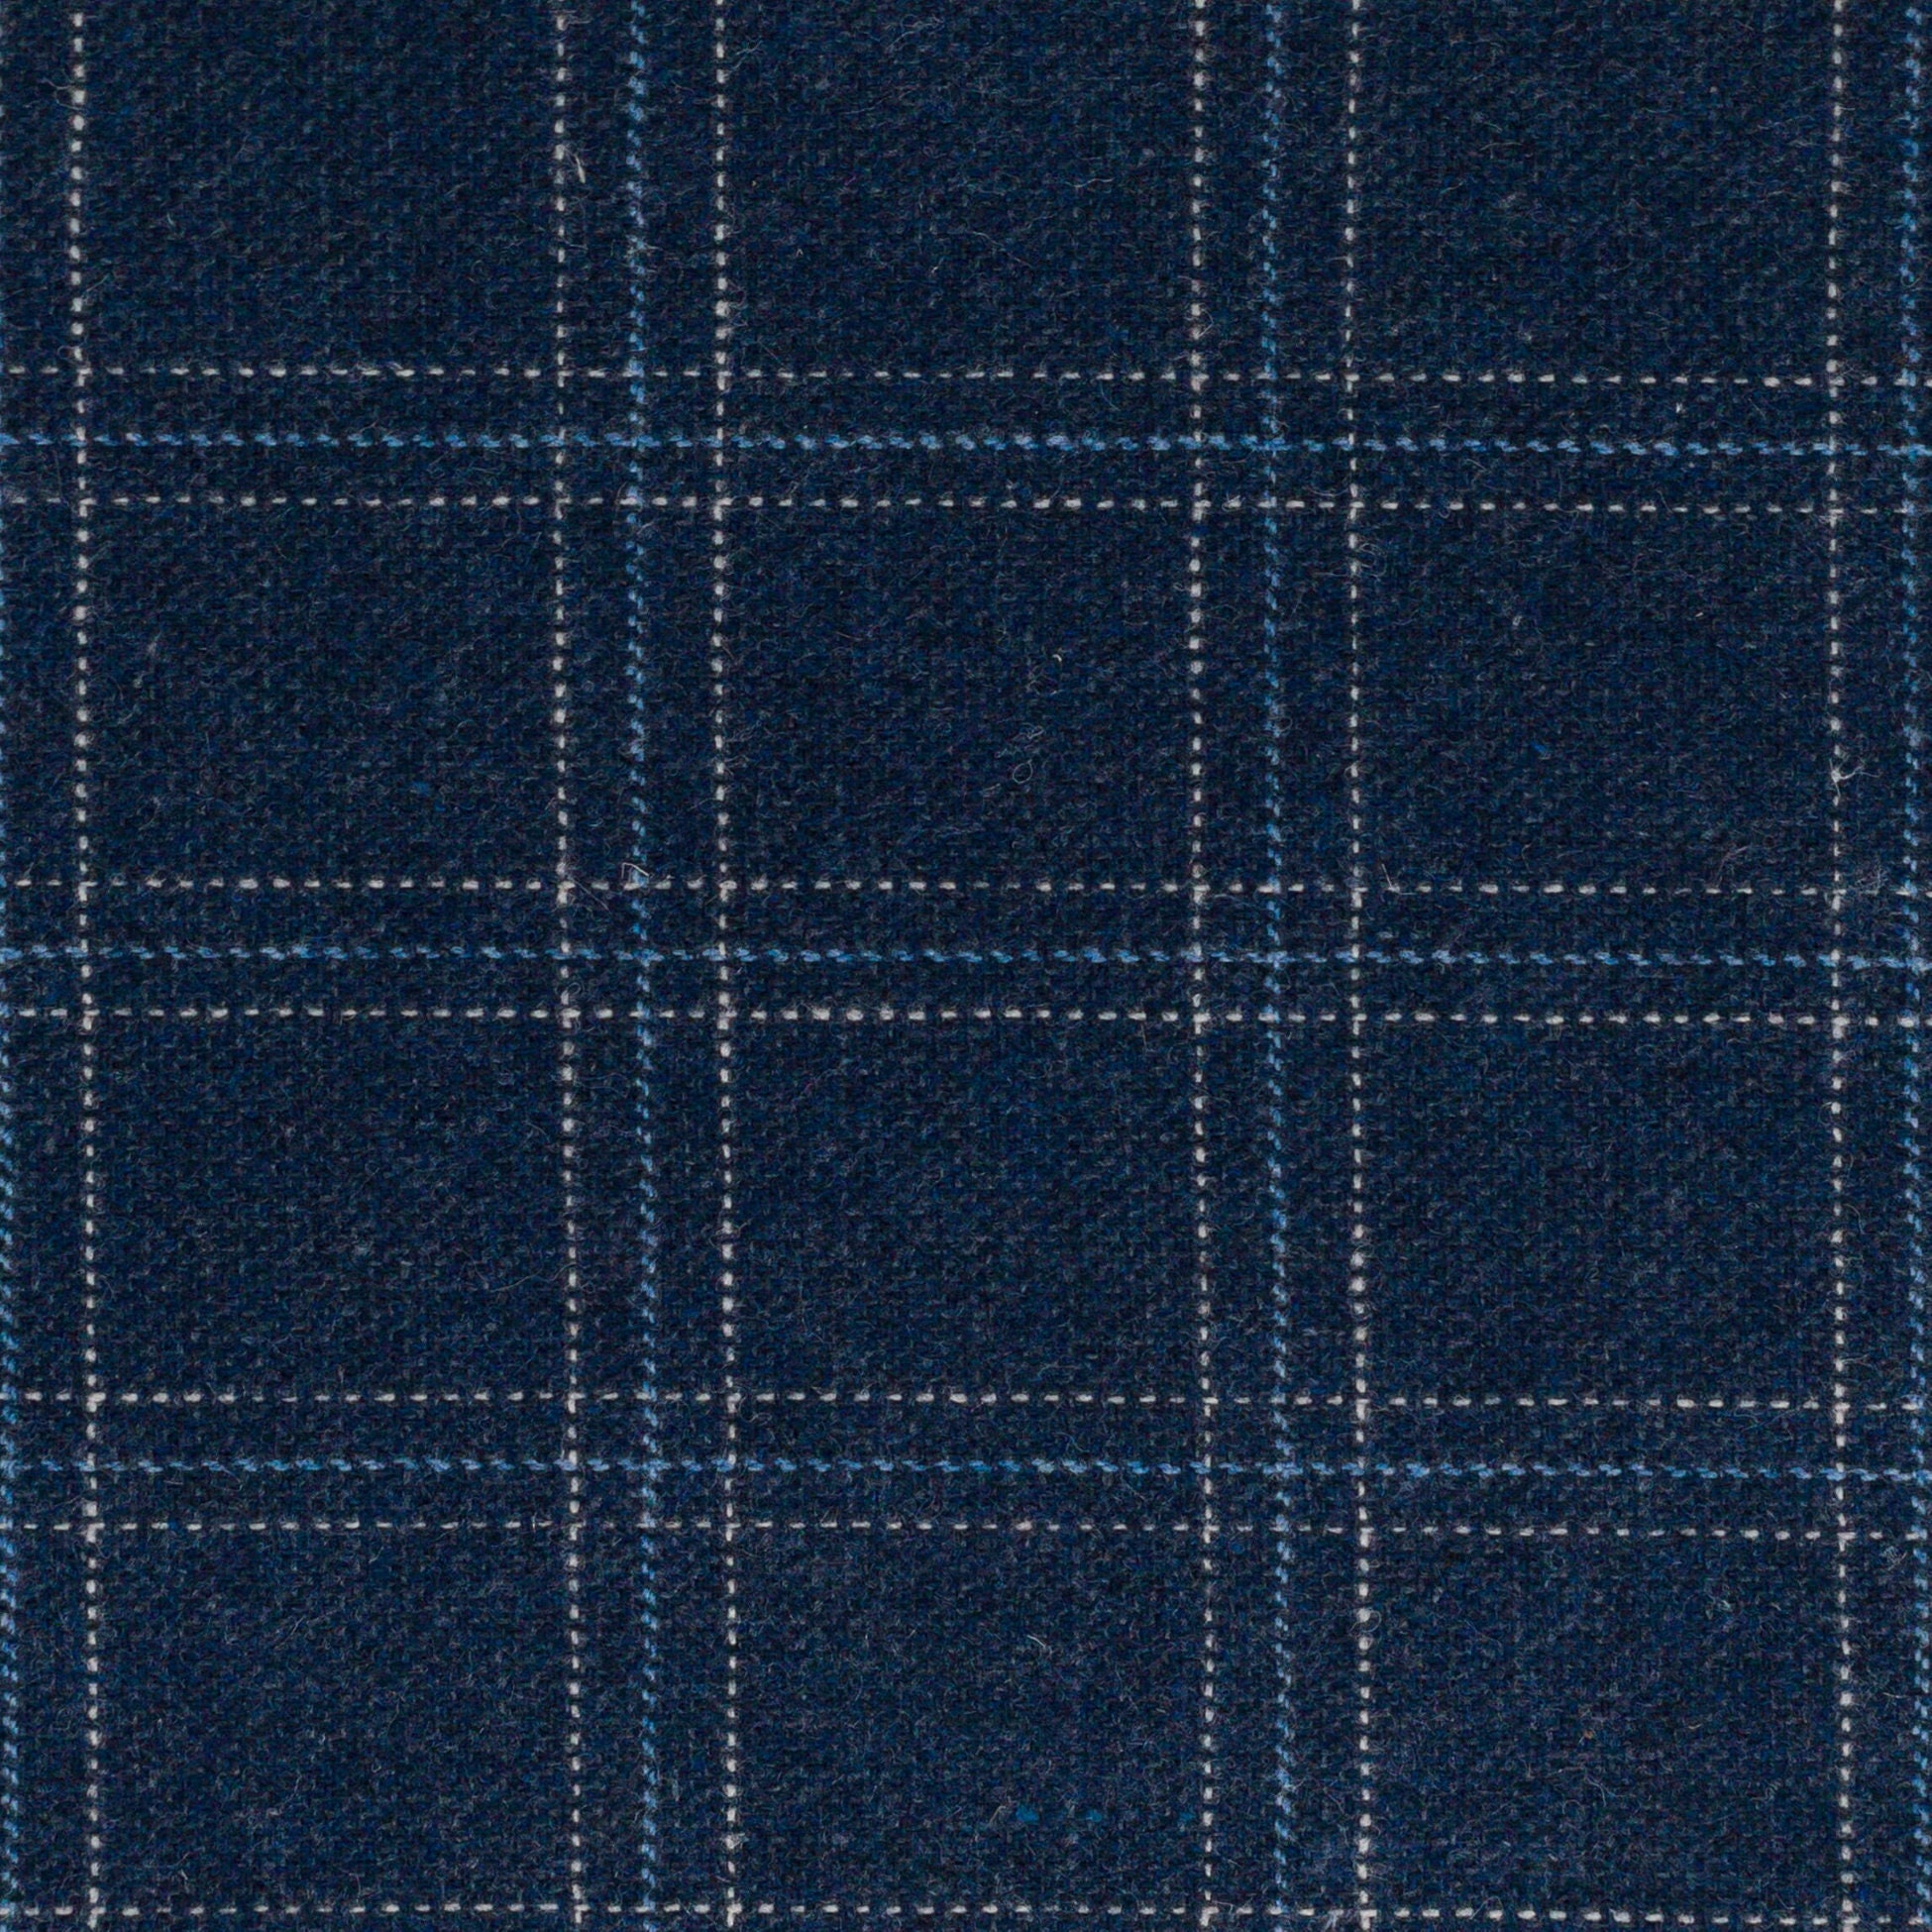 Pillow Dark Plaid for Fabric Plaid Blue Fabric 281 - Navy Navy Dark Upholstery Wool Plaid Fabric Navy Etsy Check Blue Furniture SP Fabric